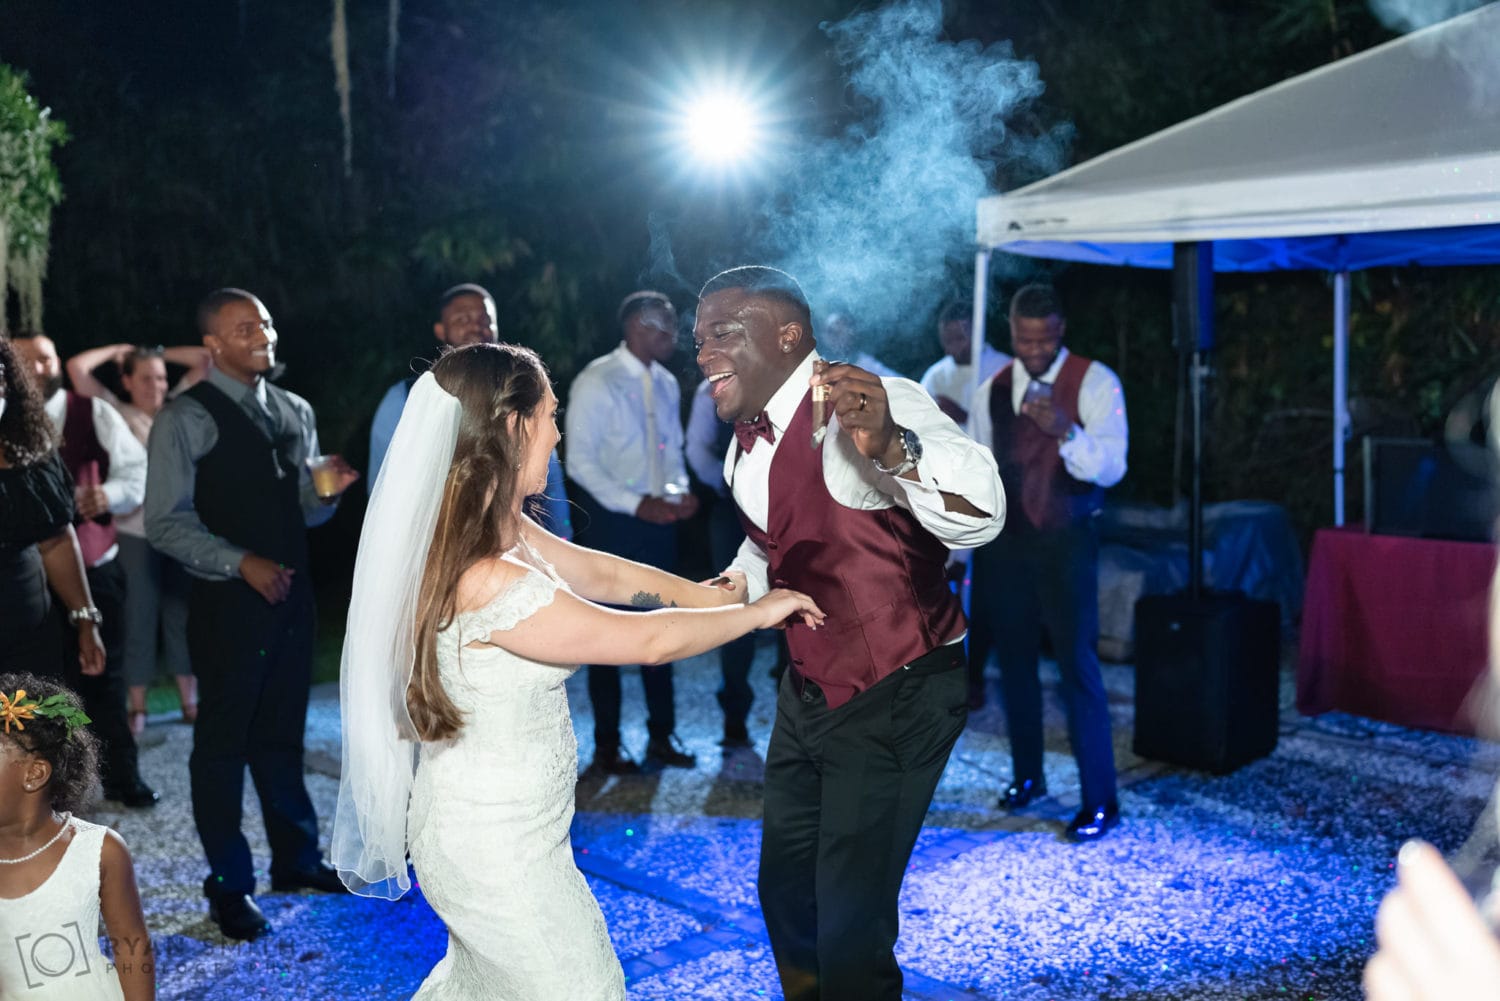 Fun dancing at outdoor reception - Magnolia Plantation - Charleston, SC